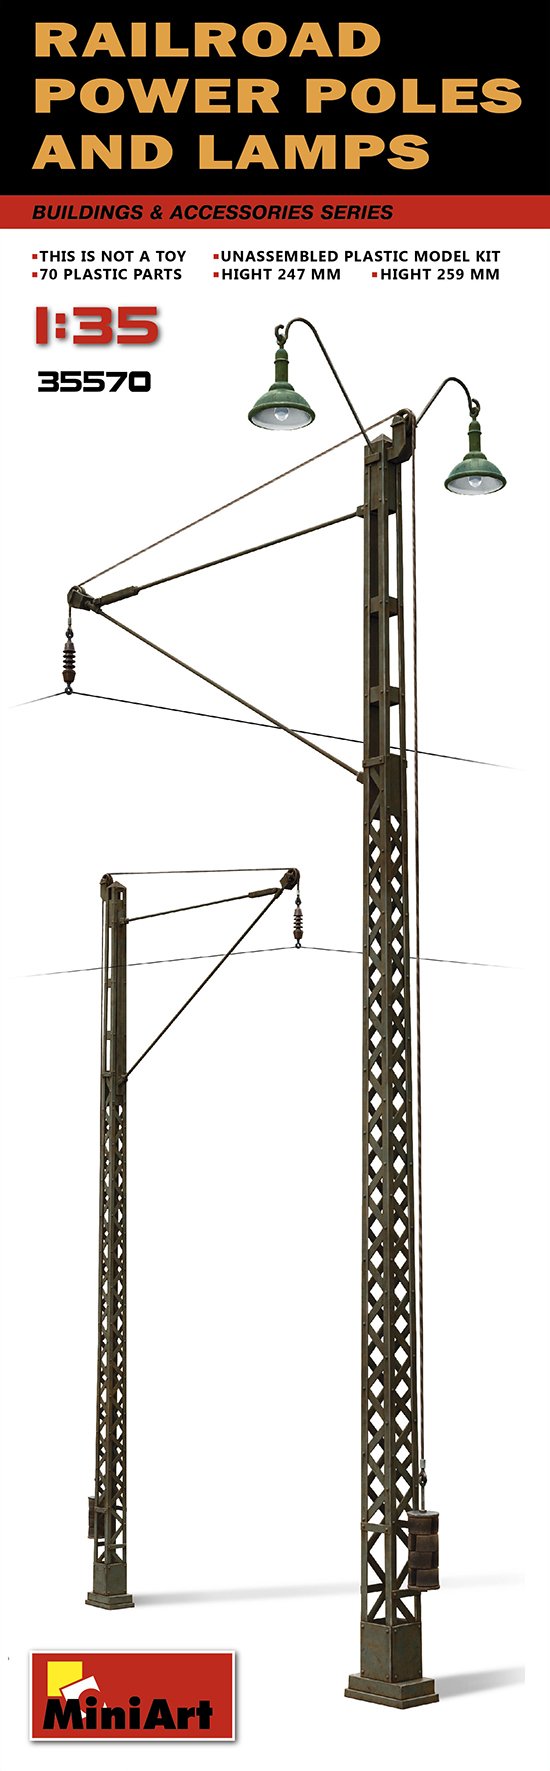 Miniart 1:35 - Railroad Power Poles & Lamps